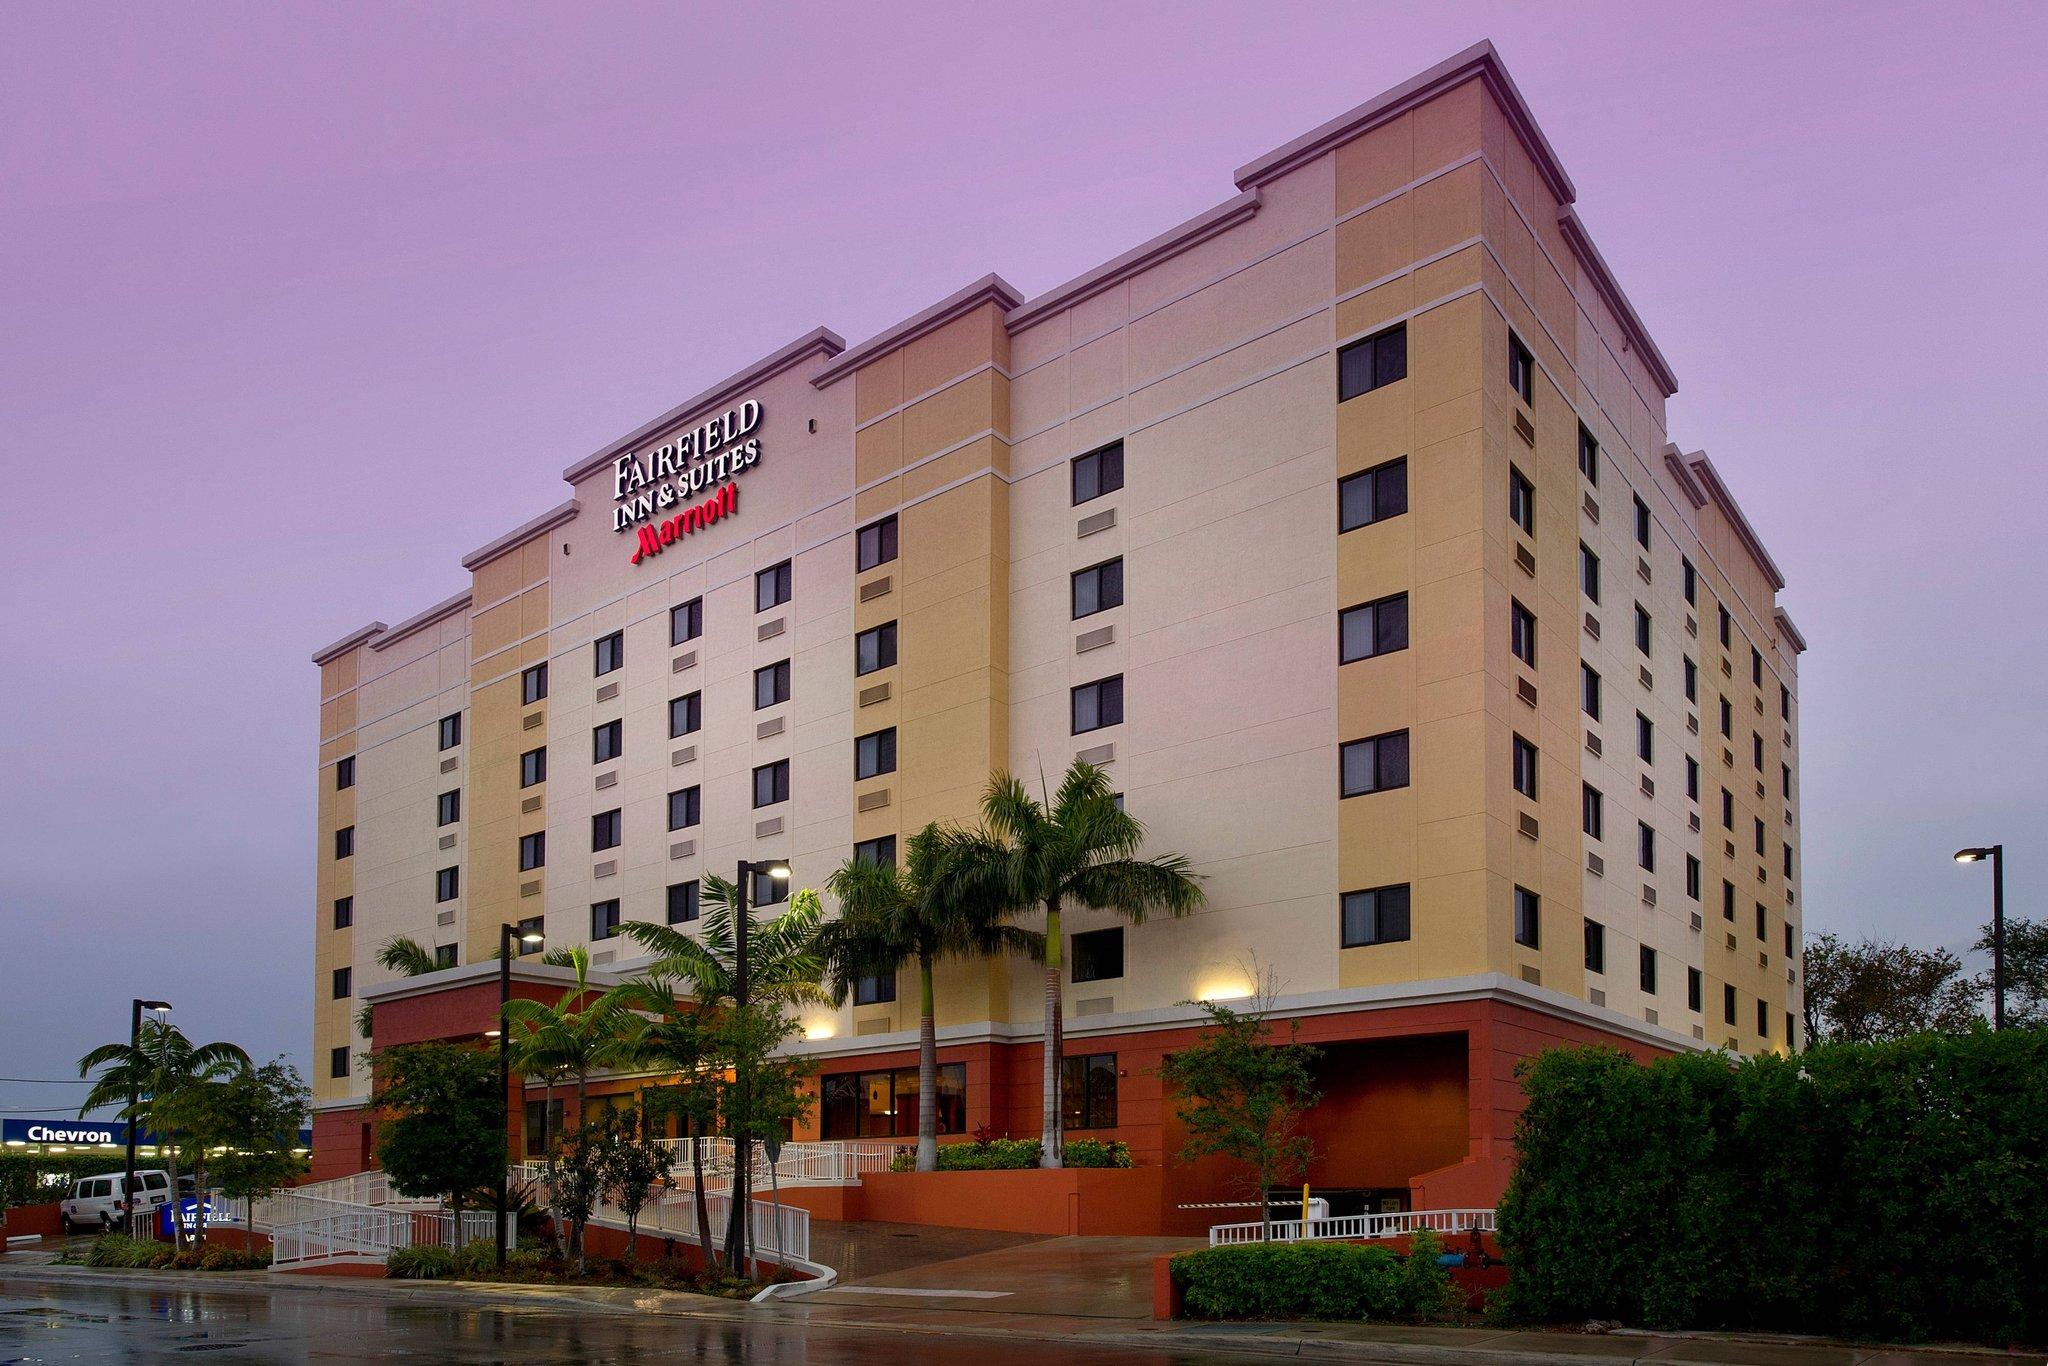 Fairfield Inn & Suites Miami Airport South in Miami, FL